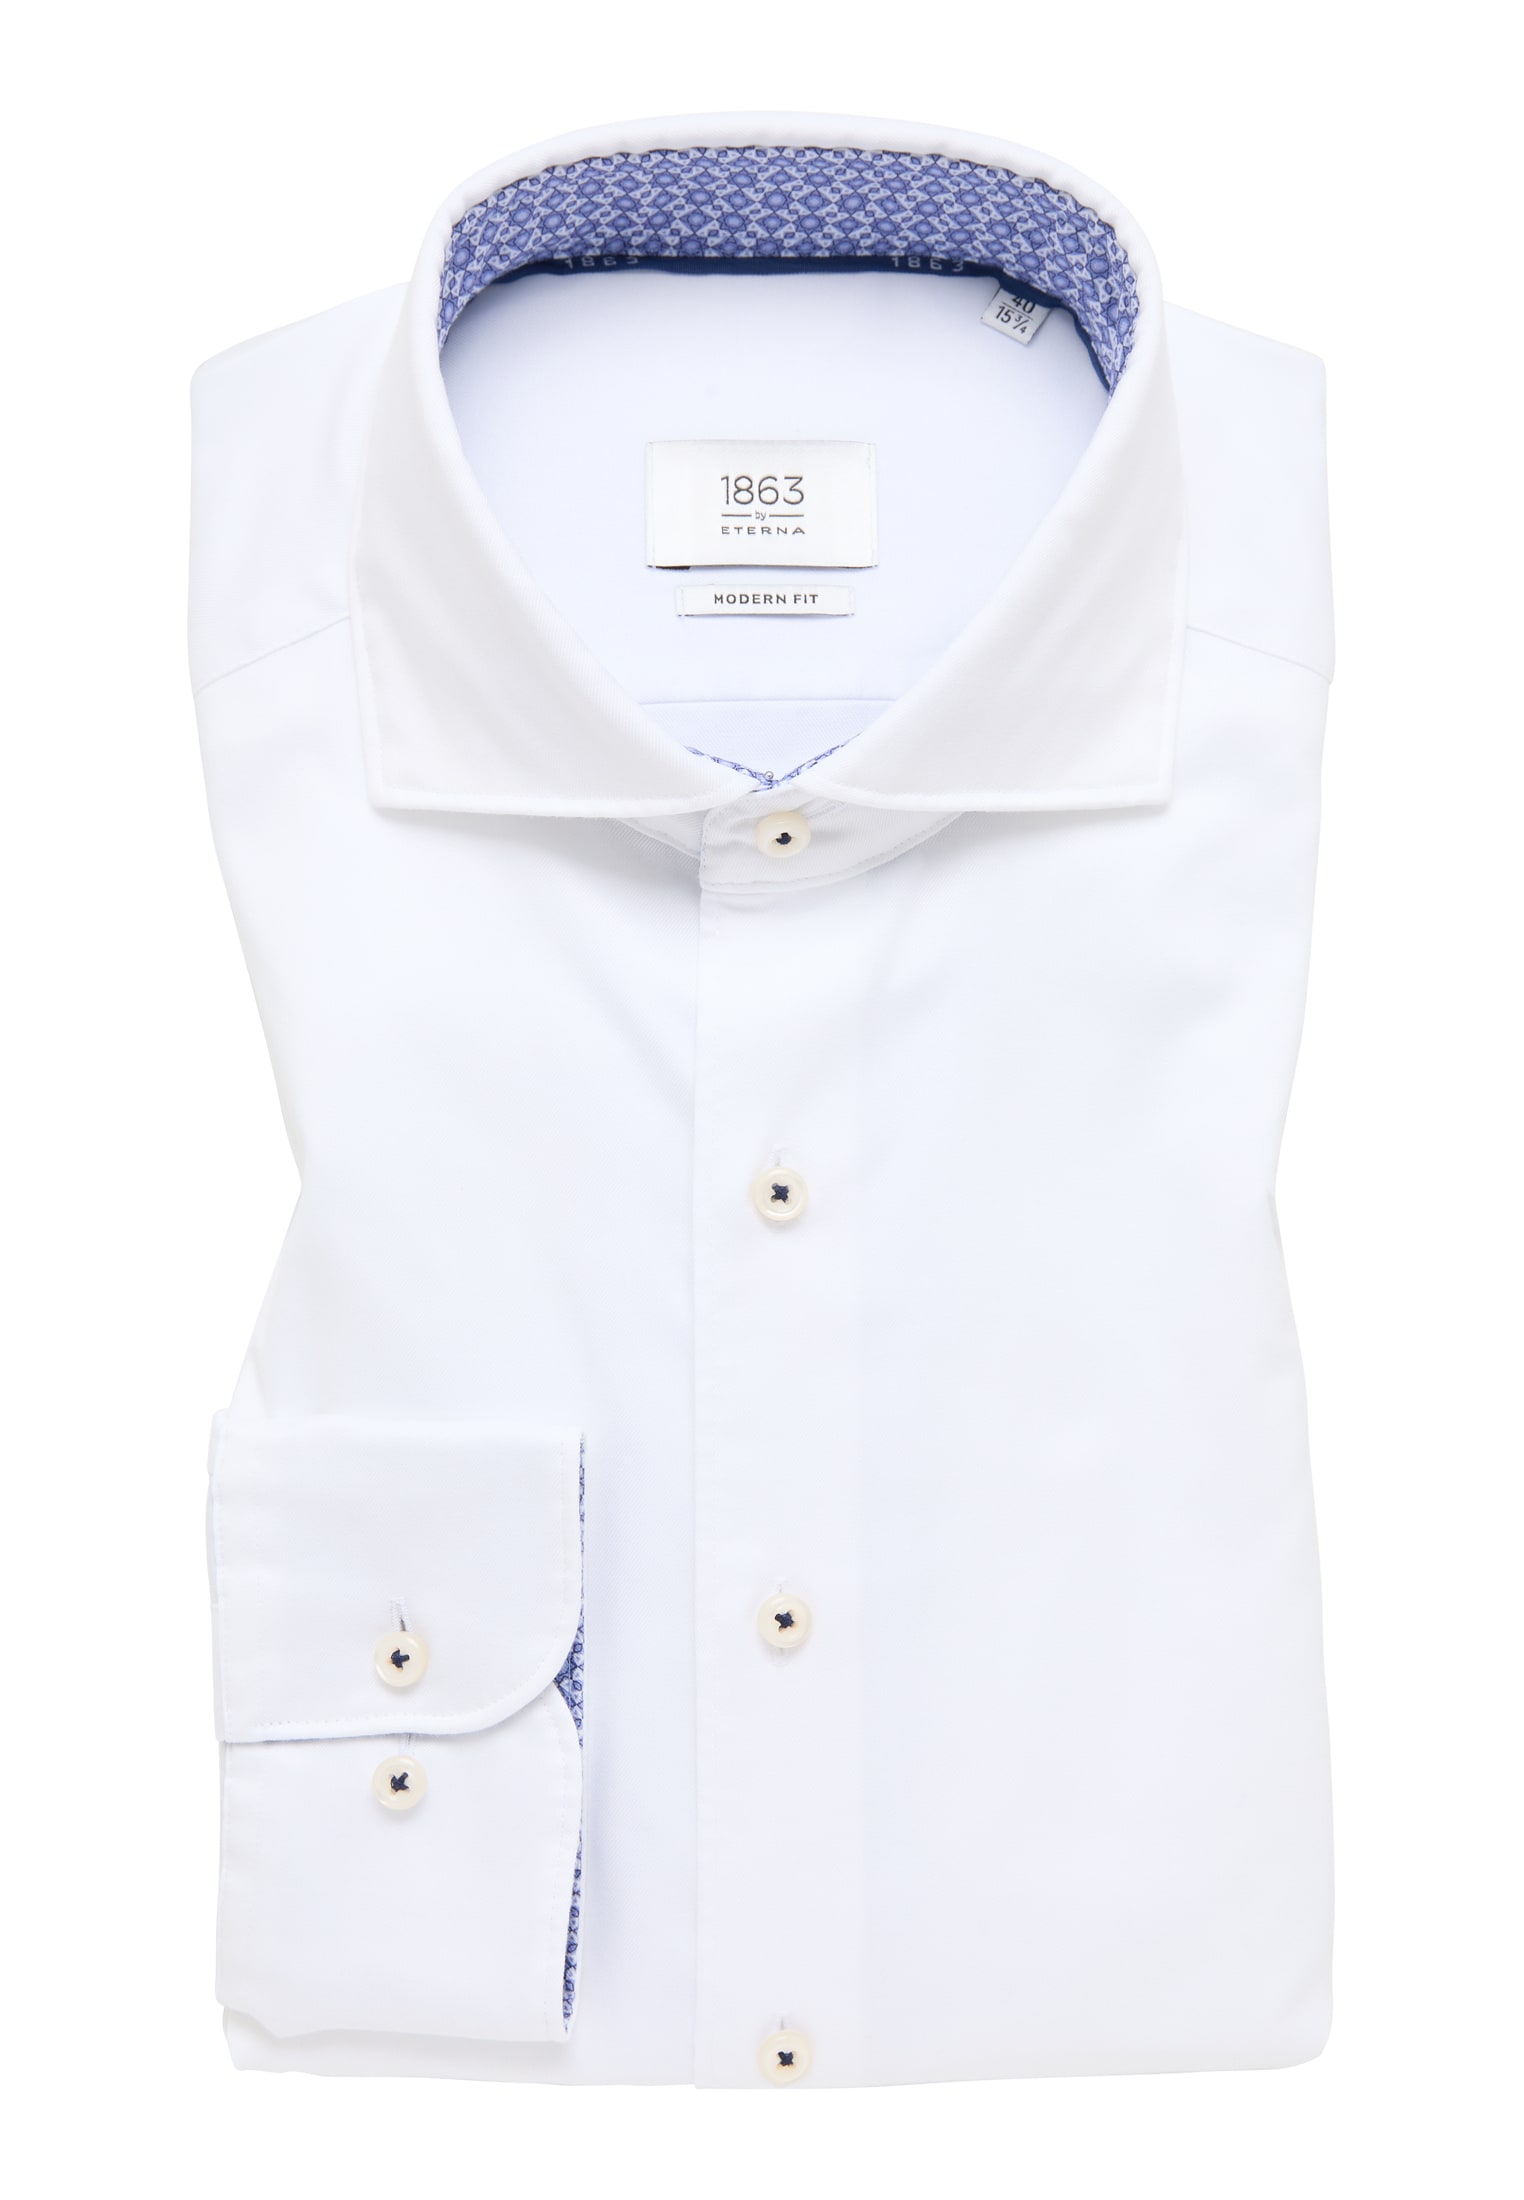 MODERN FIT Soft Shirt off-white 42 | Luxury | 1SH11519-00-02-42-1/1 off-white in | Langarm | unifarben